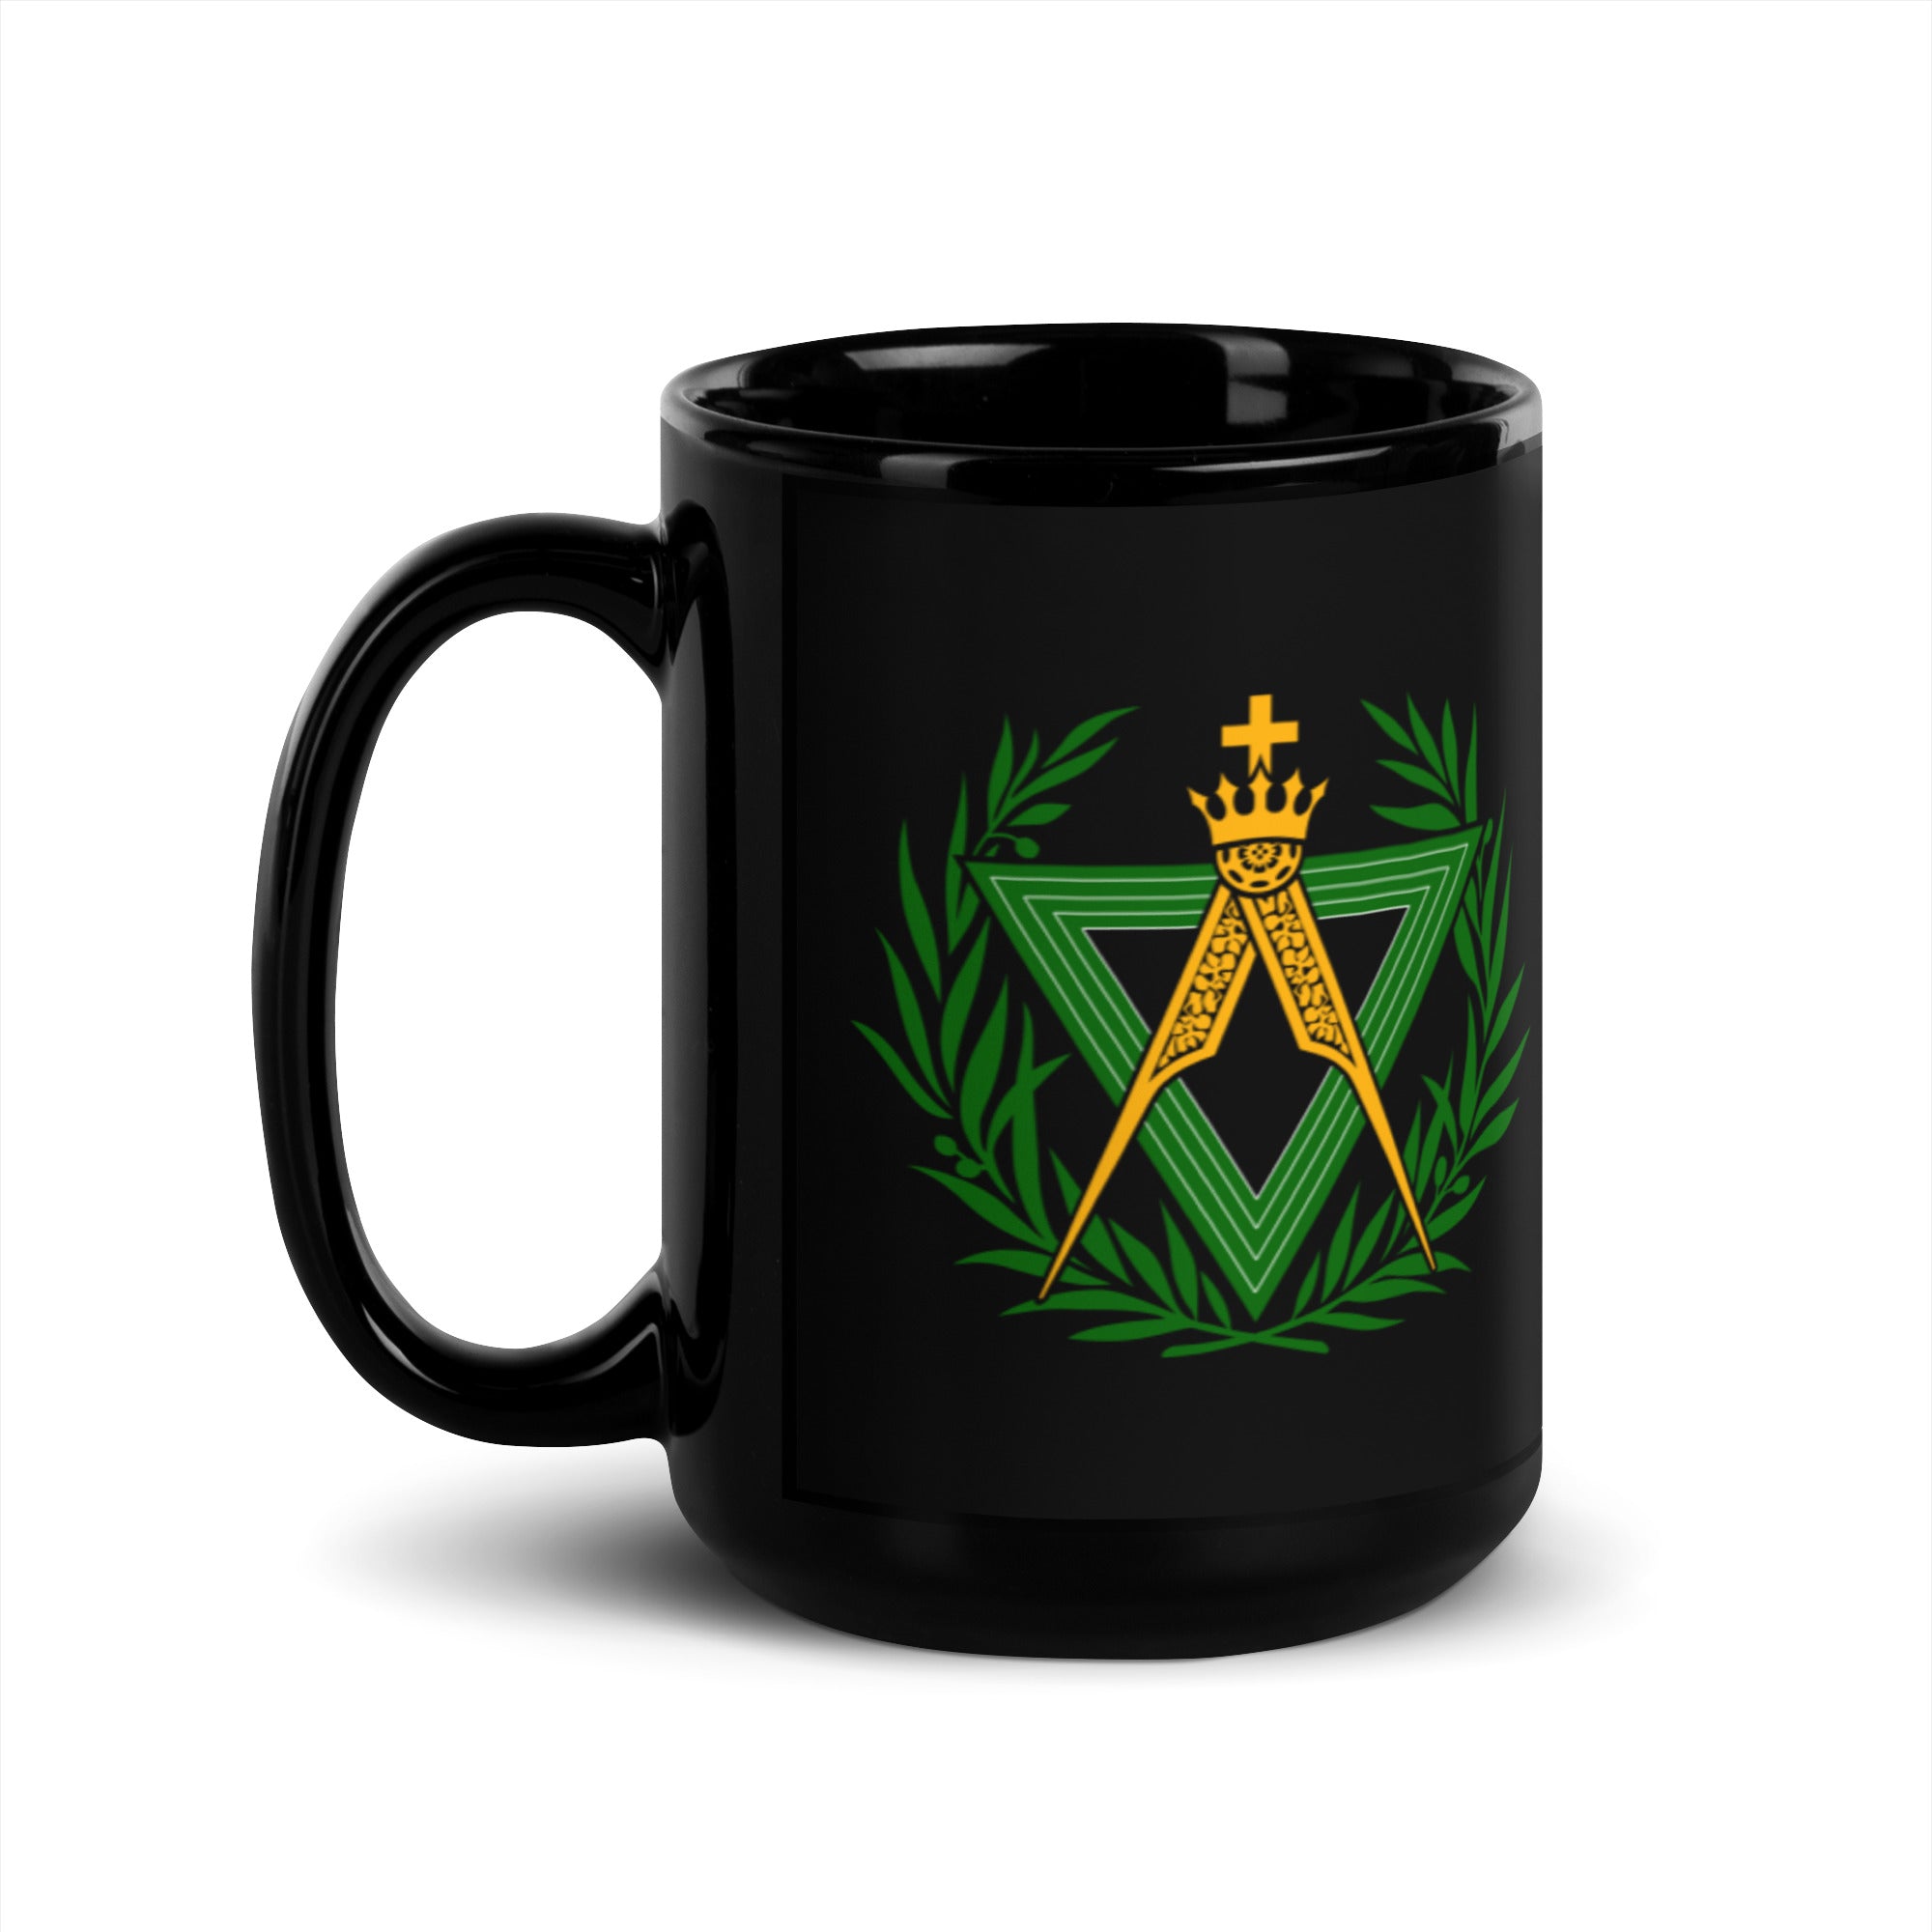 Allied Masonic Degrees Mugs